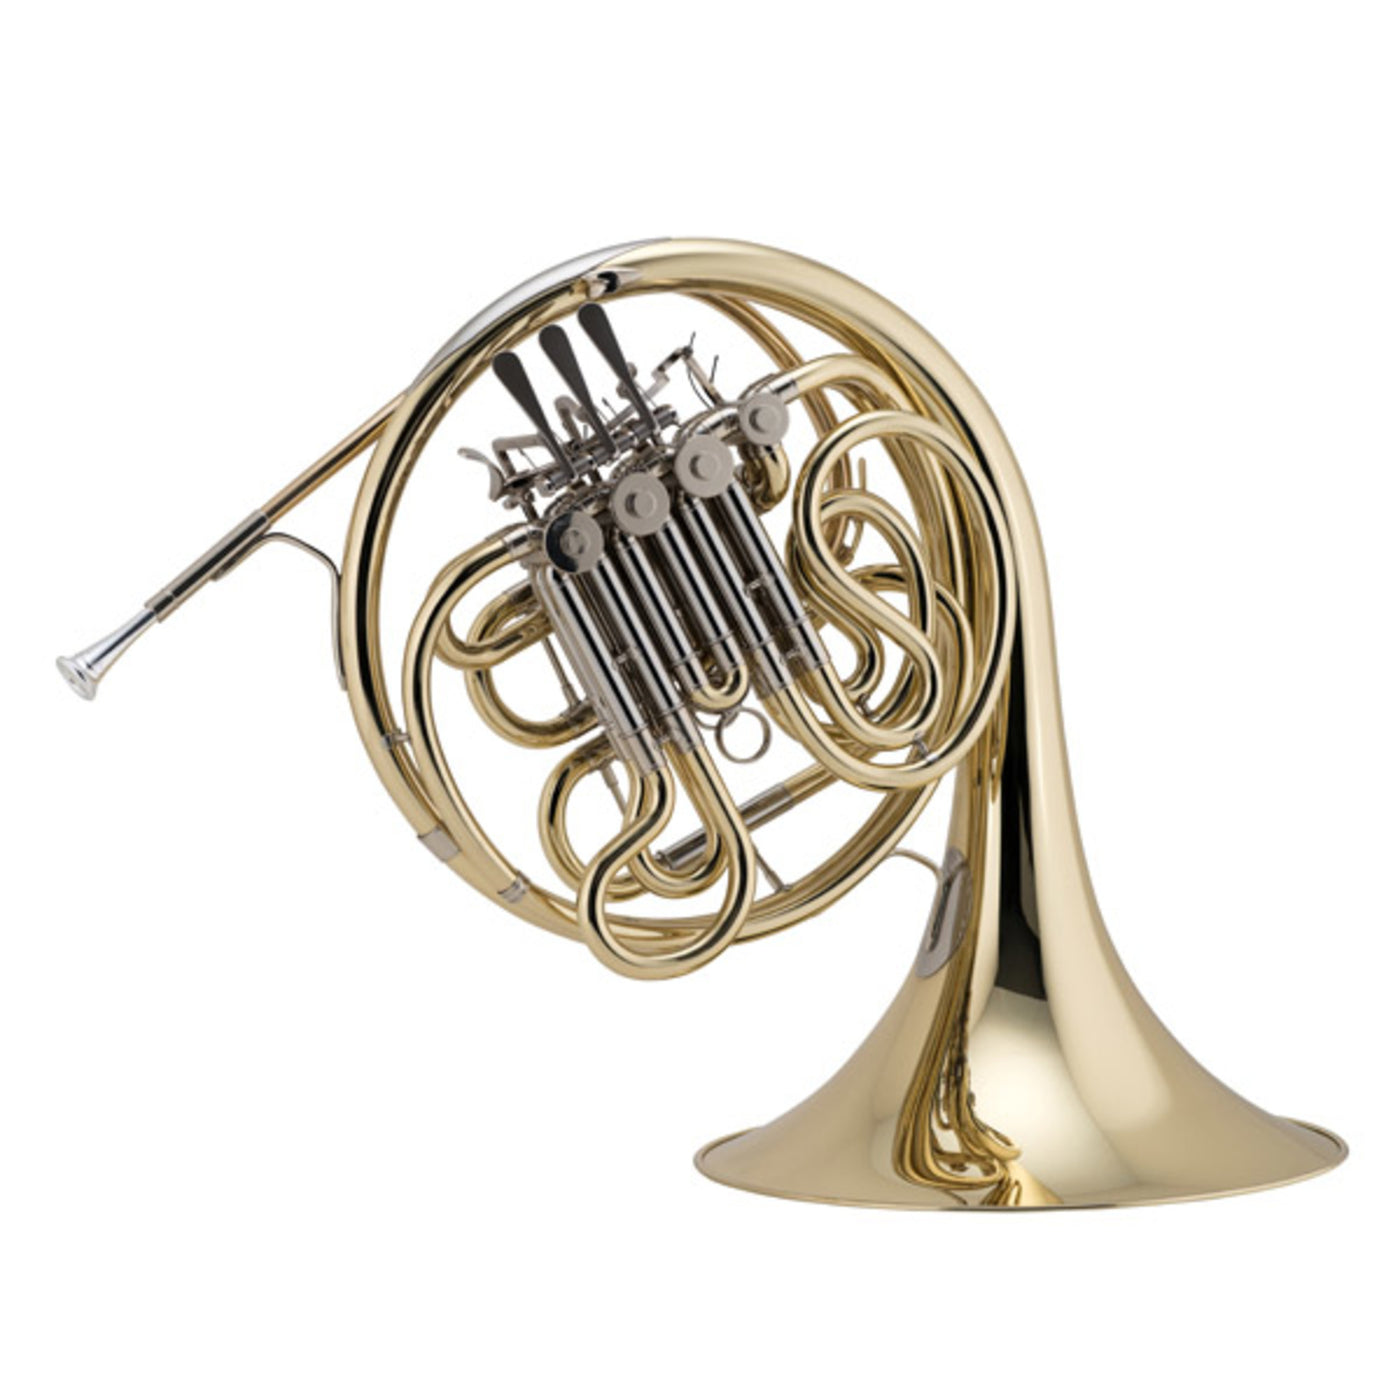 C.G. Conn Geyer Wrap French Horn (7D)